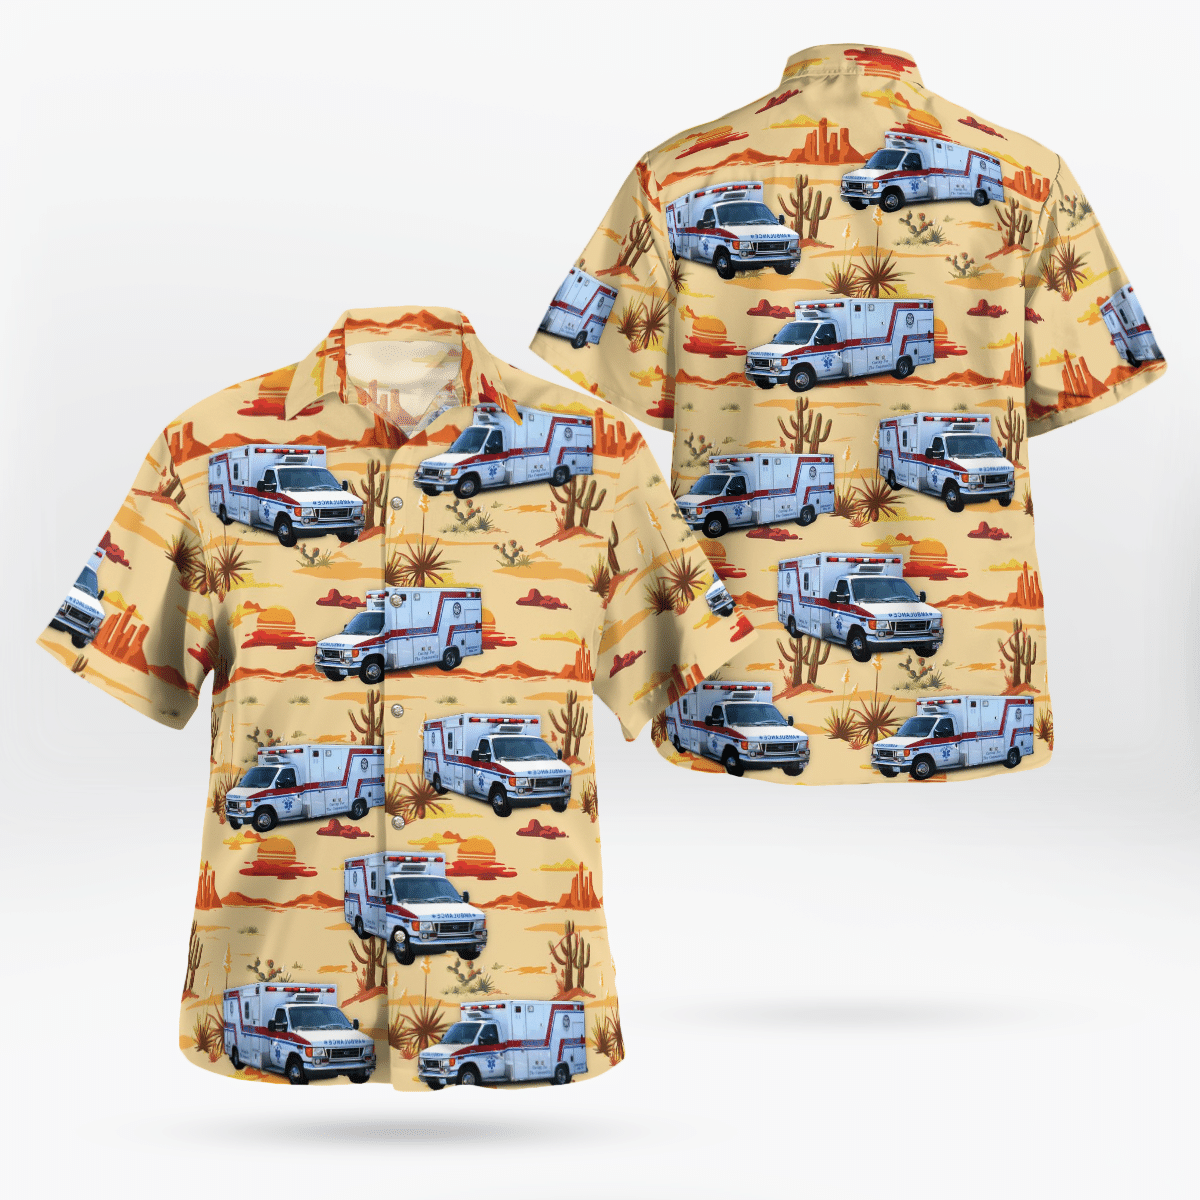 Why don't you order Hot Hawaiian Shirt today? 369